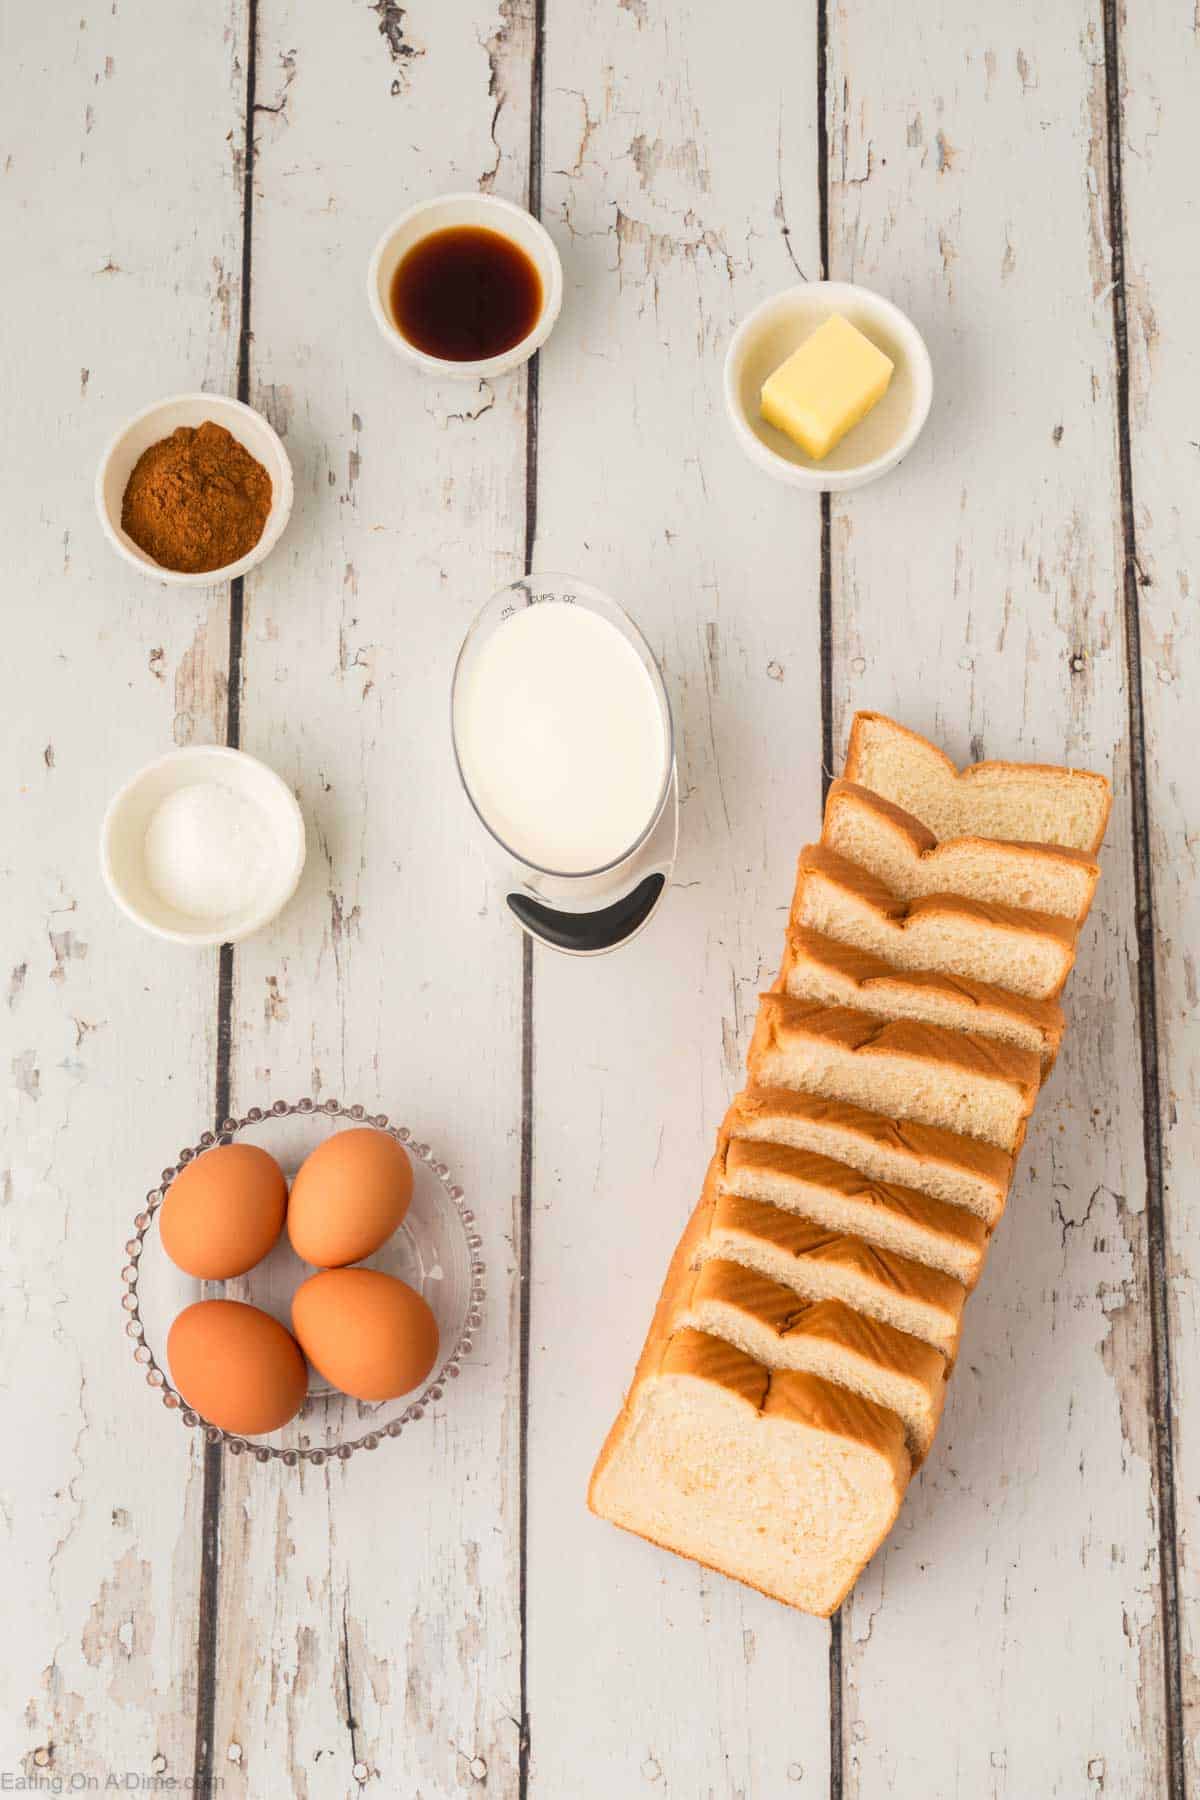 French Toast Sticks ingredients - Texas Toast, eggs, heavy cream, vanilla extract, cinnamon, sugar, butter